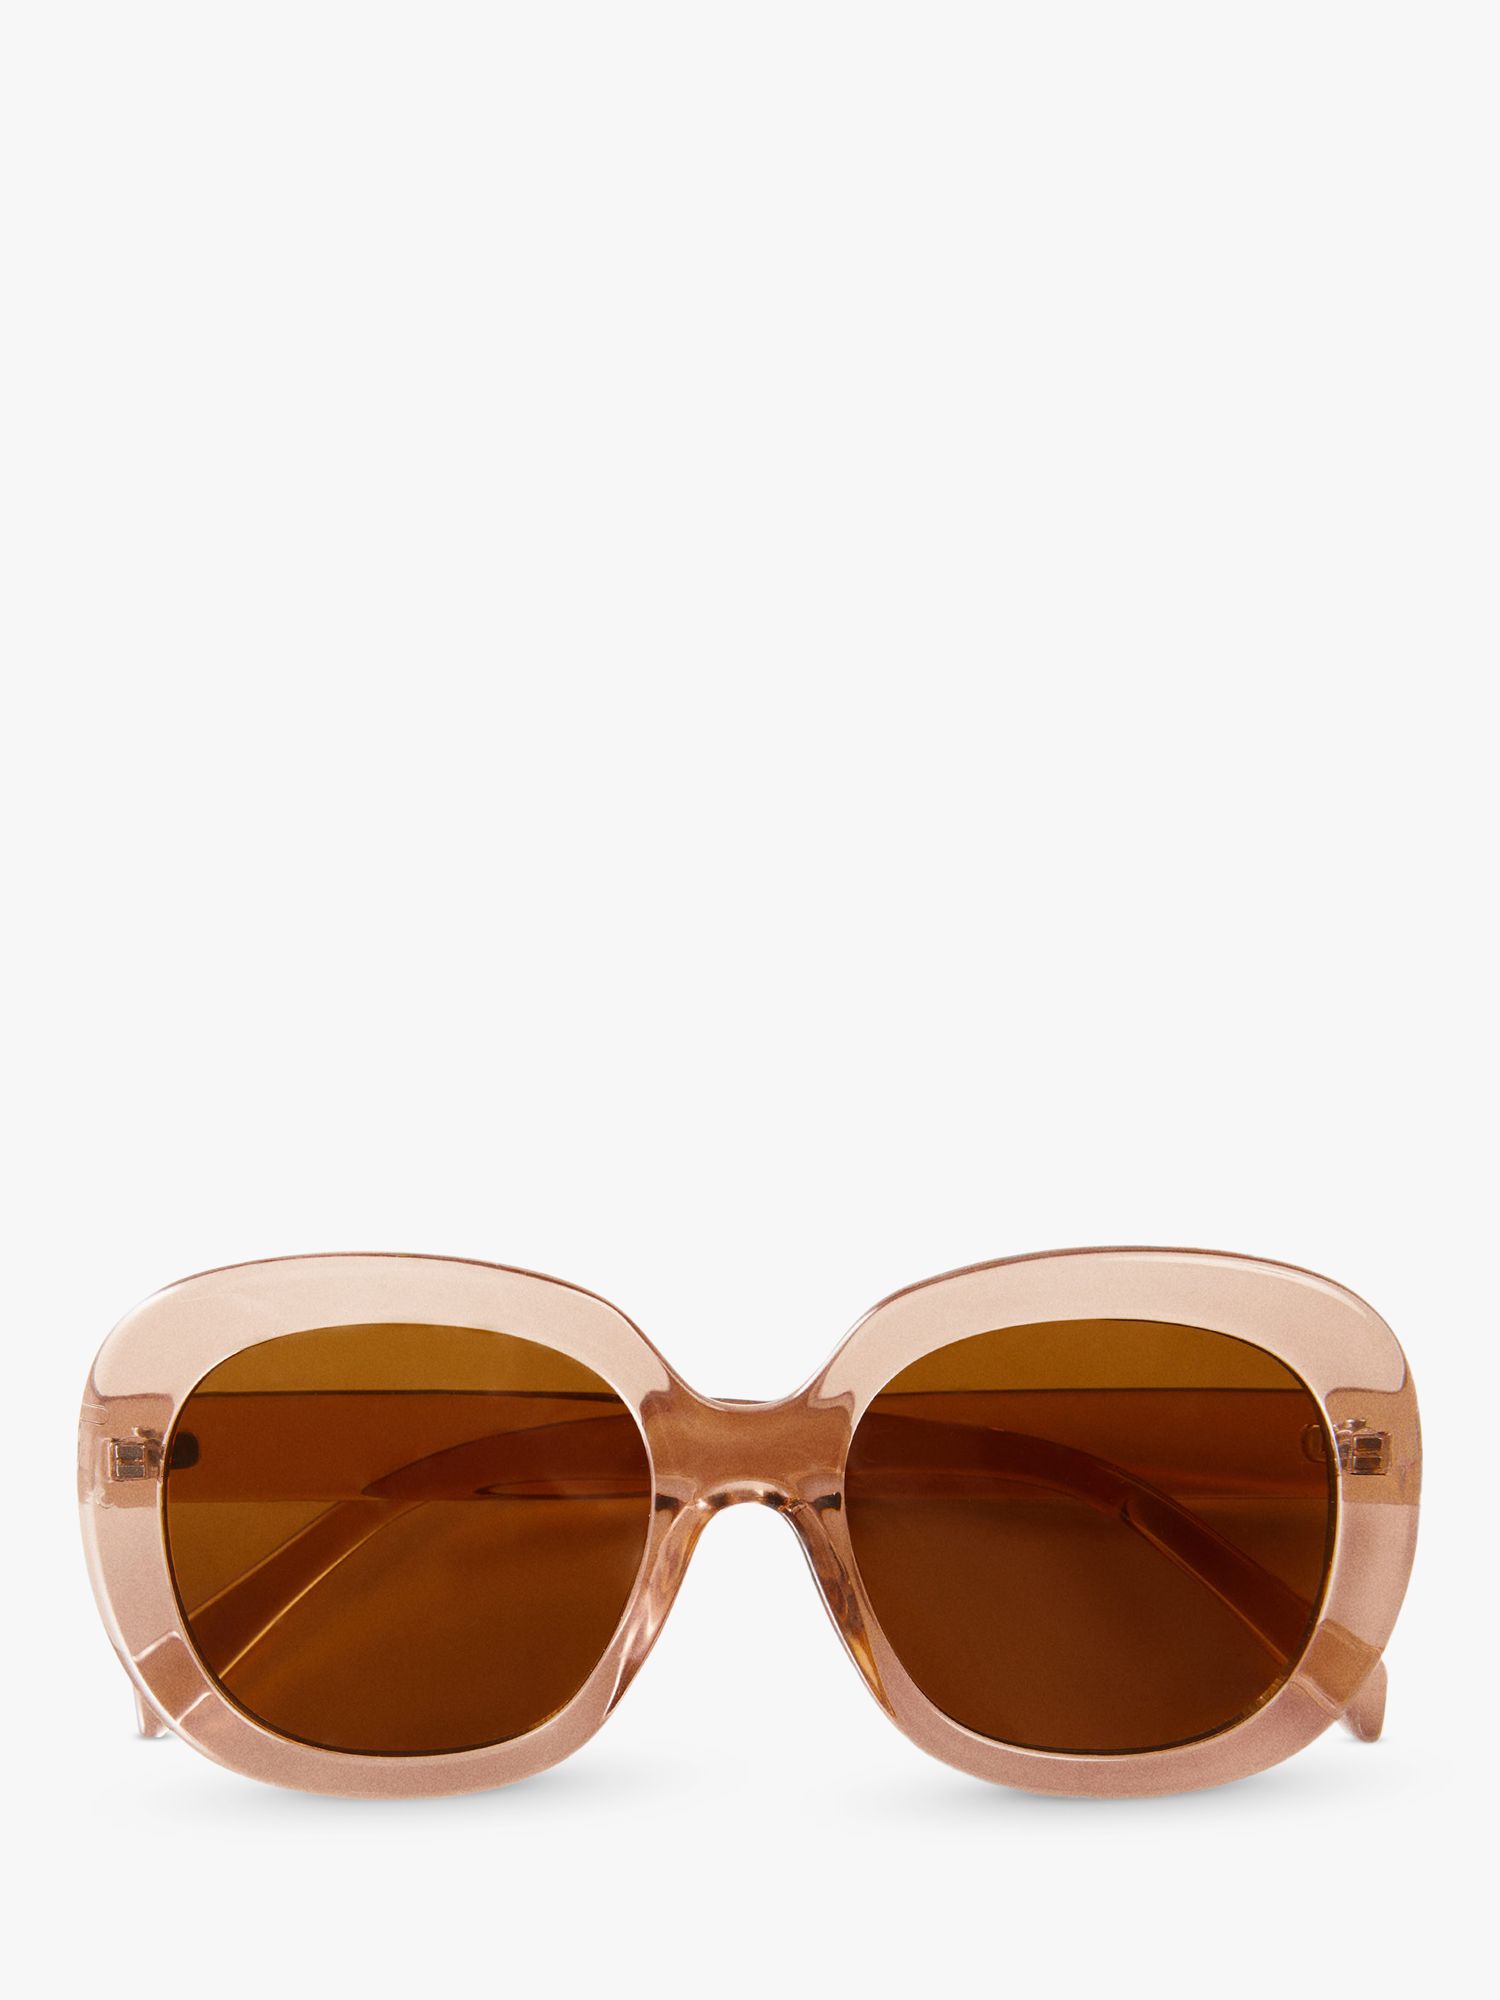 Mango Women's Favignan Oval Sunglasses, Clear Orange/Brown, One Size